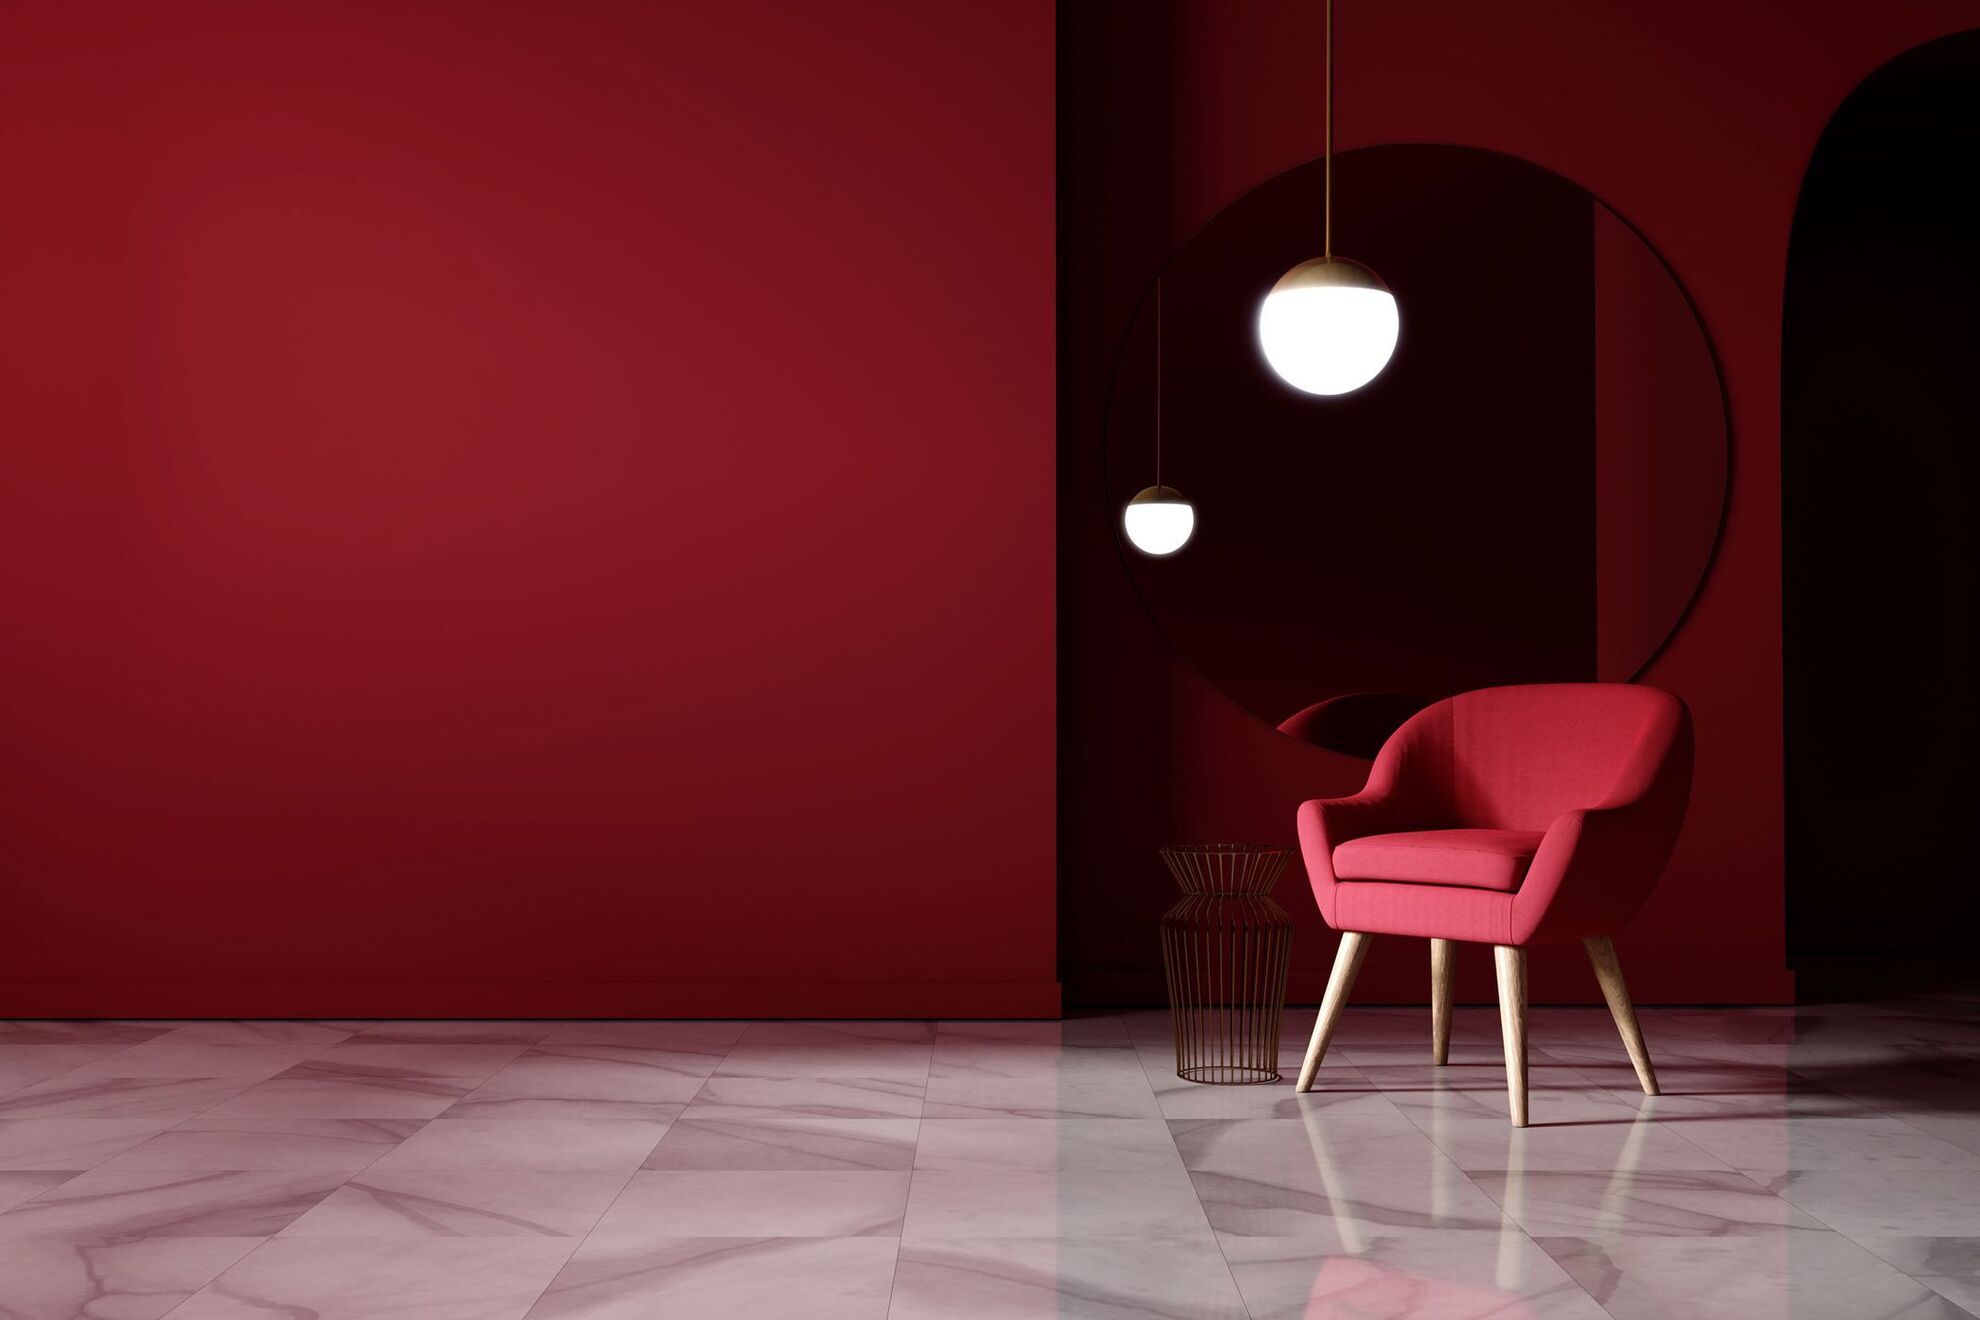 Rote Wand mit rotem Stuhl